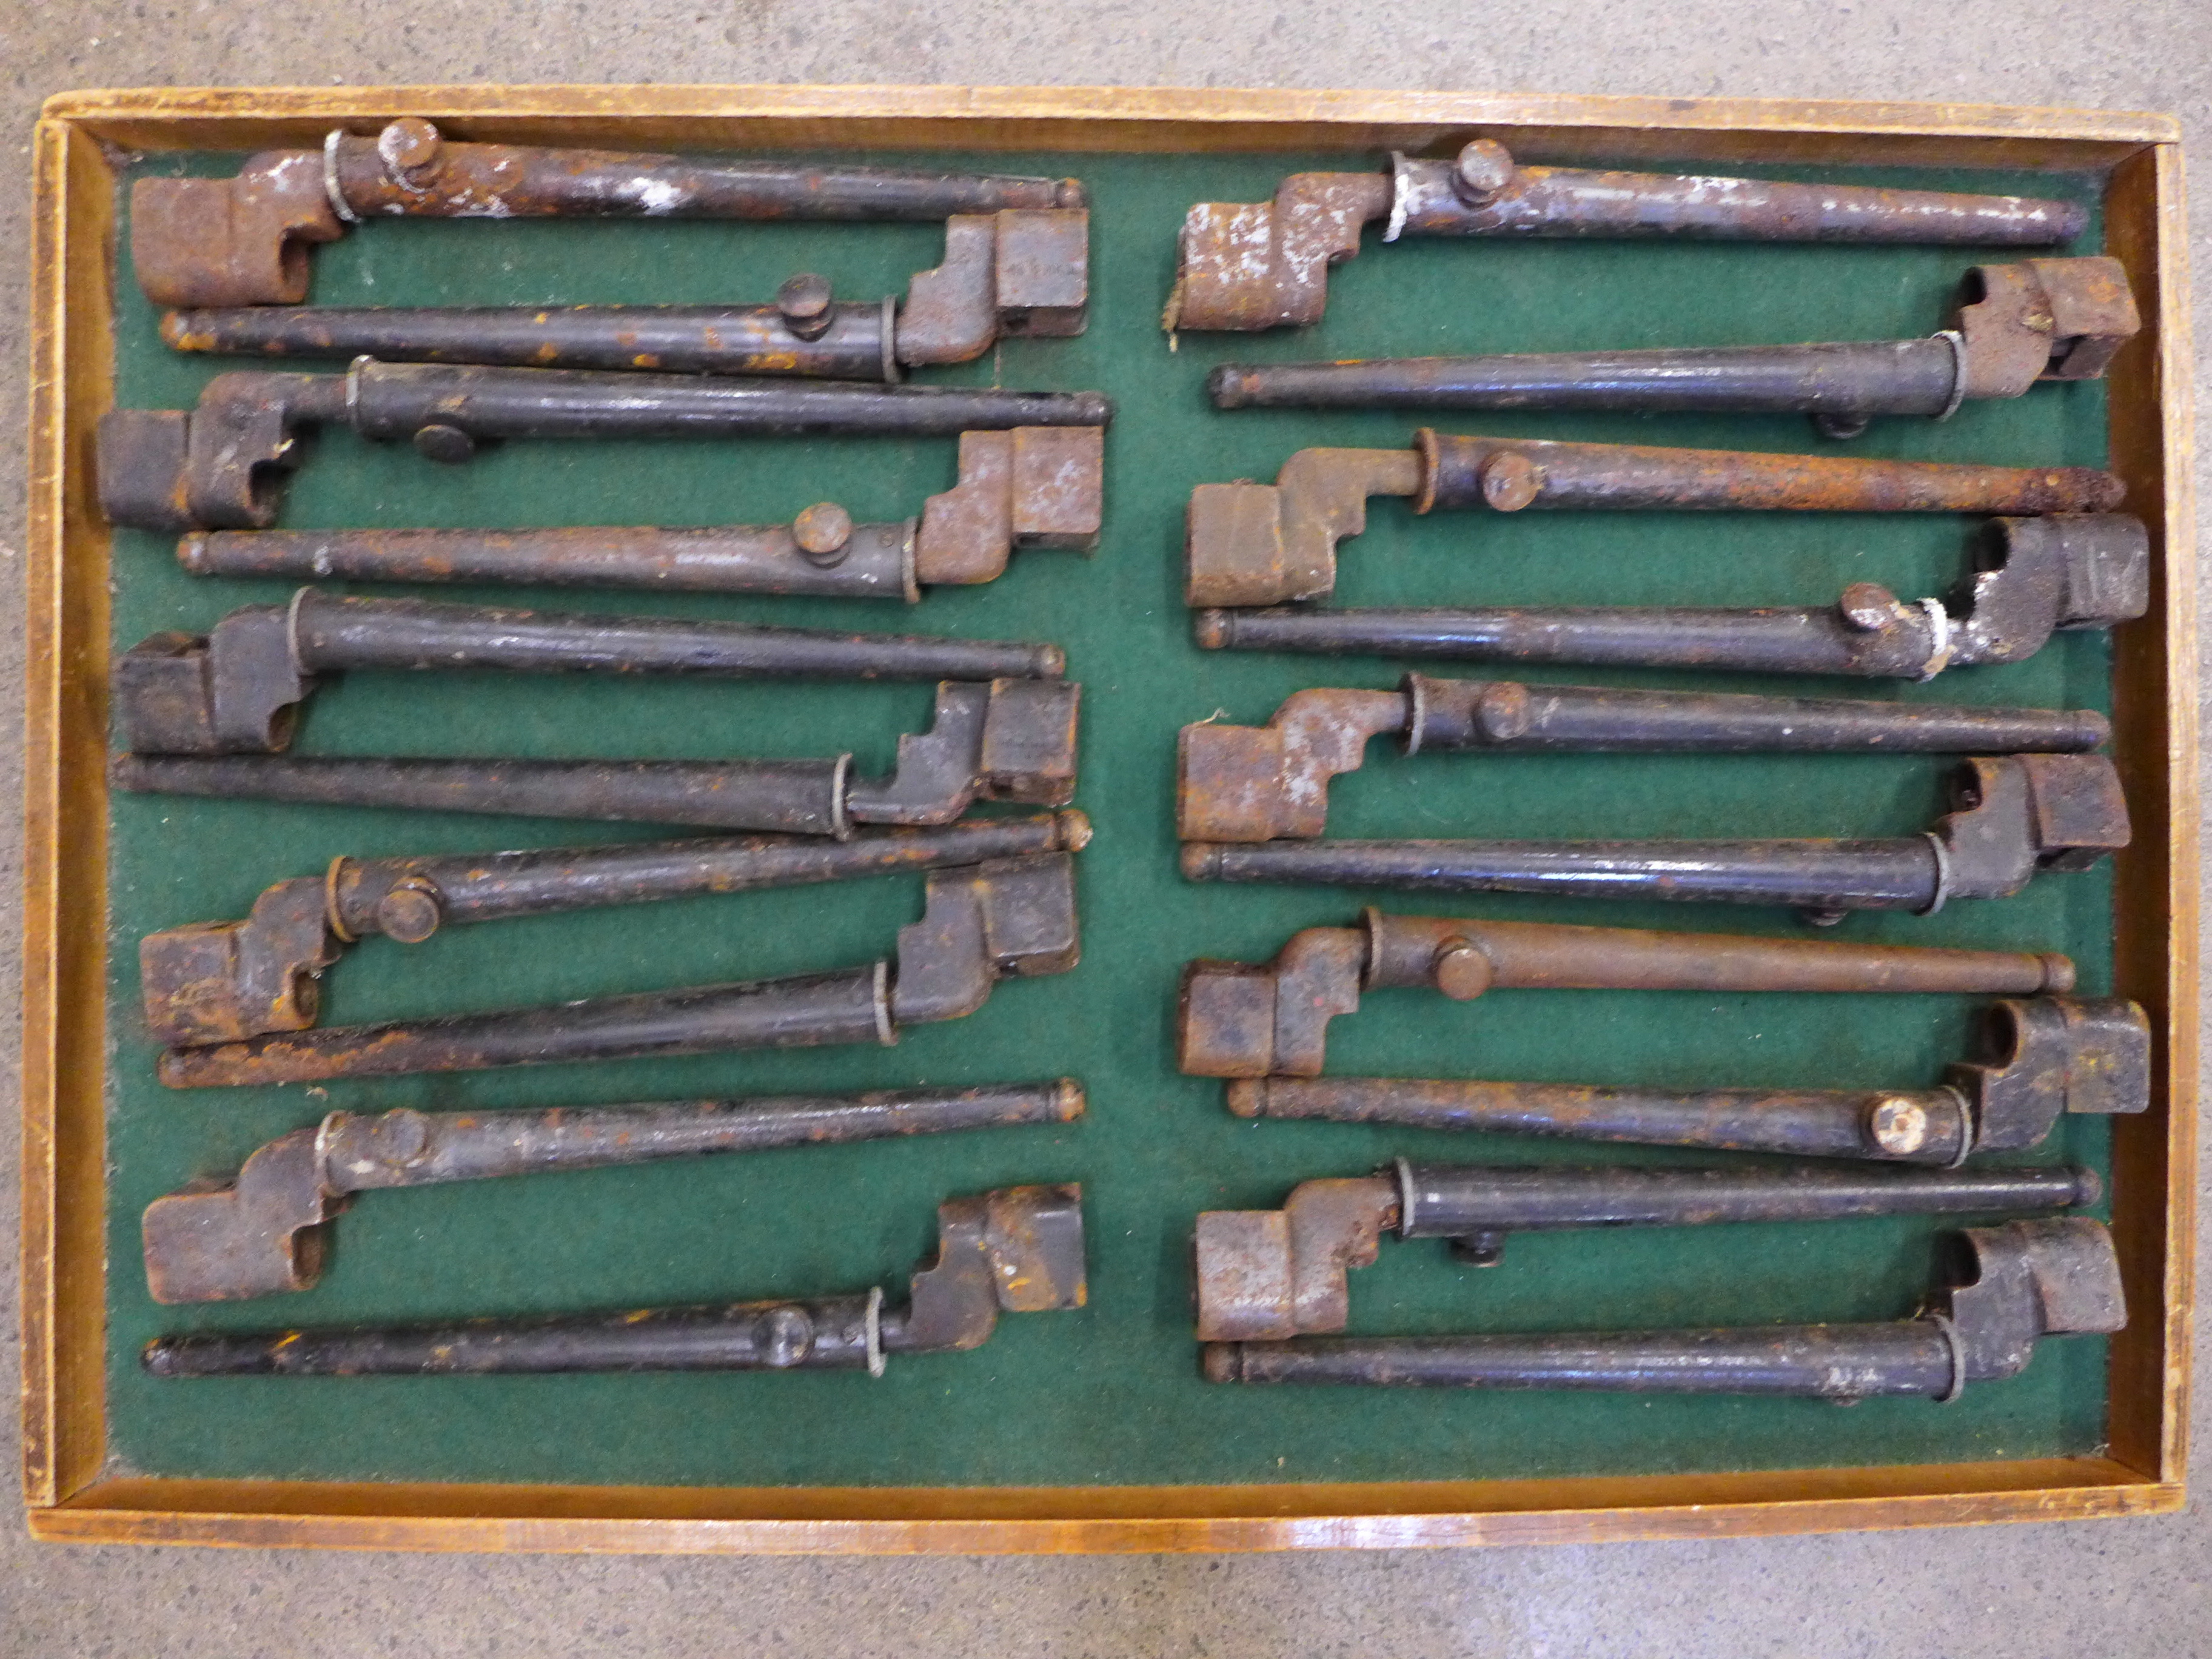 Twenty socket/spike bayonets and scabbards